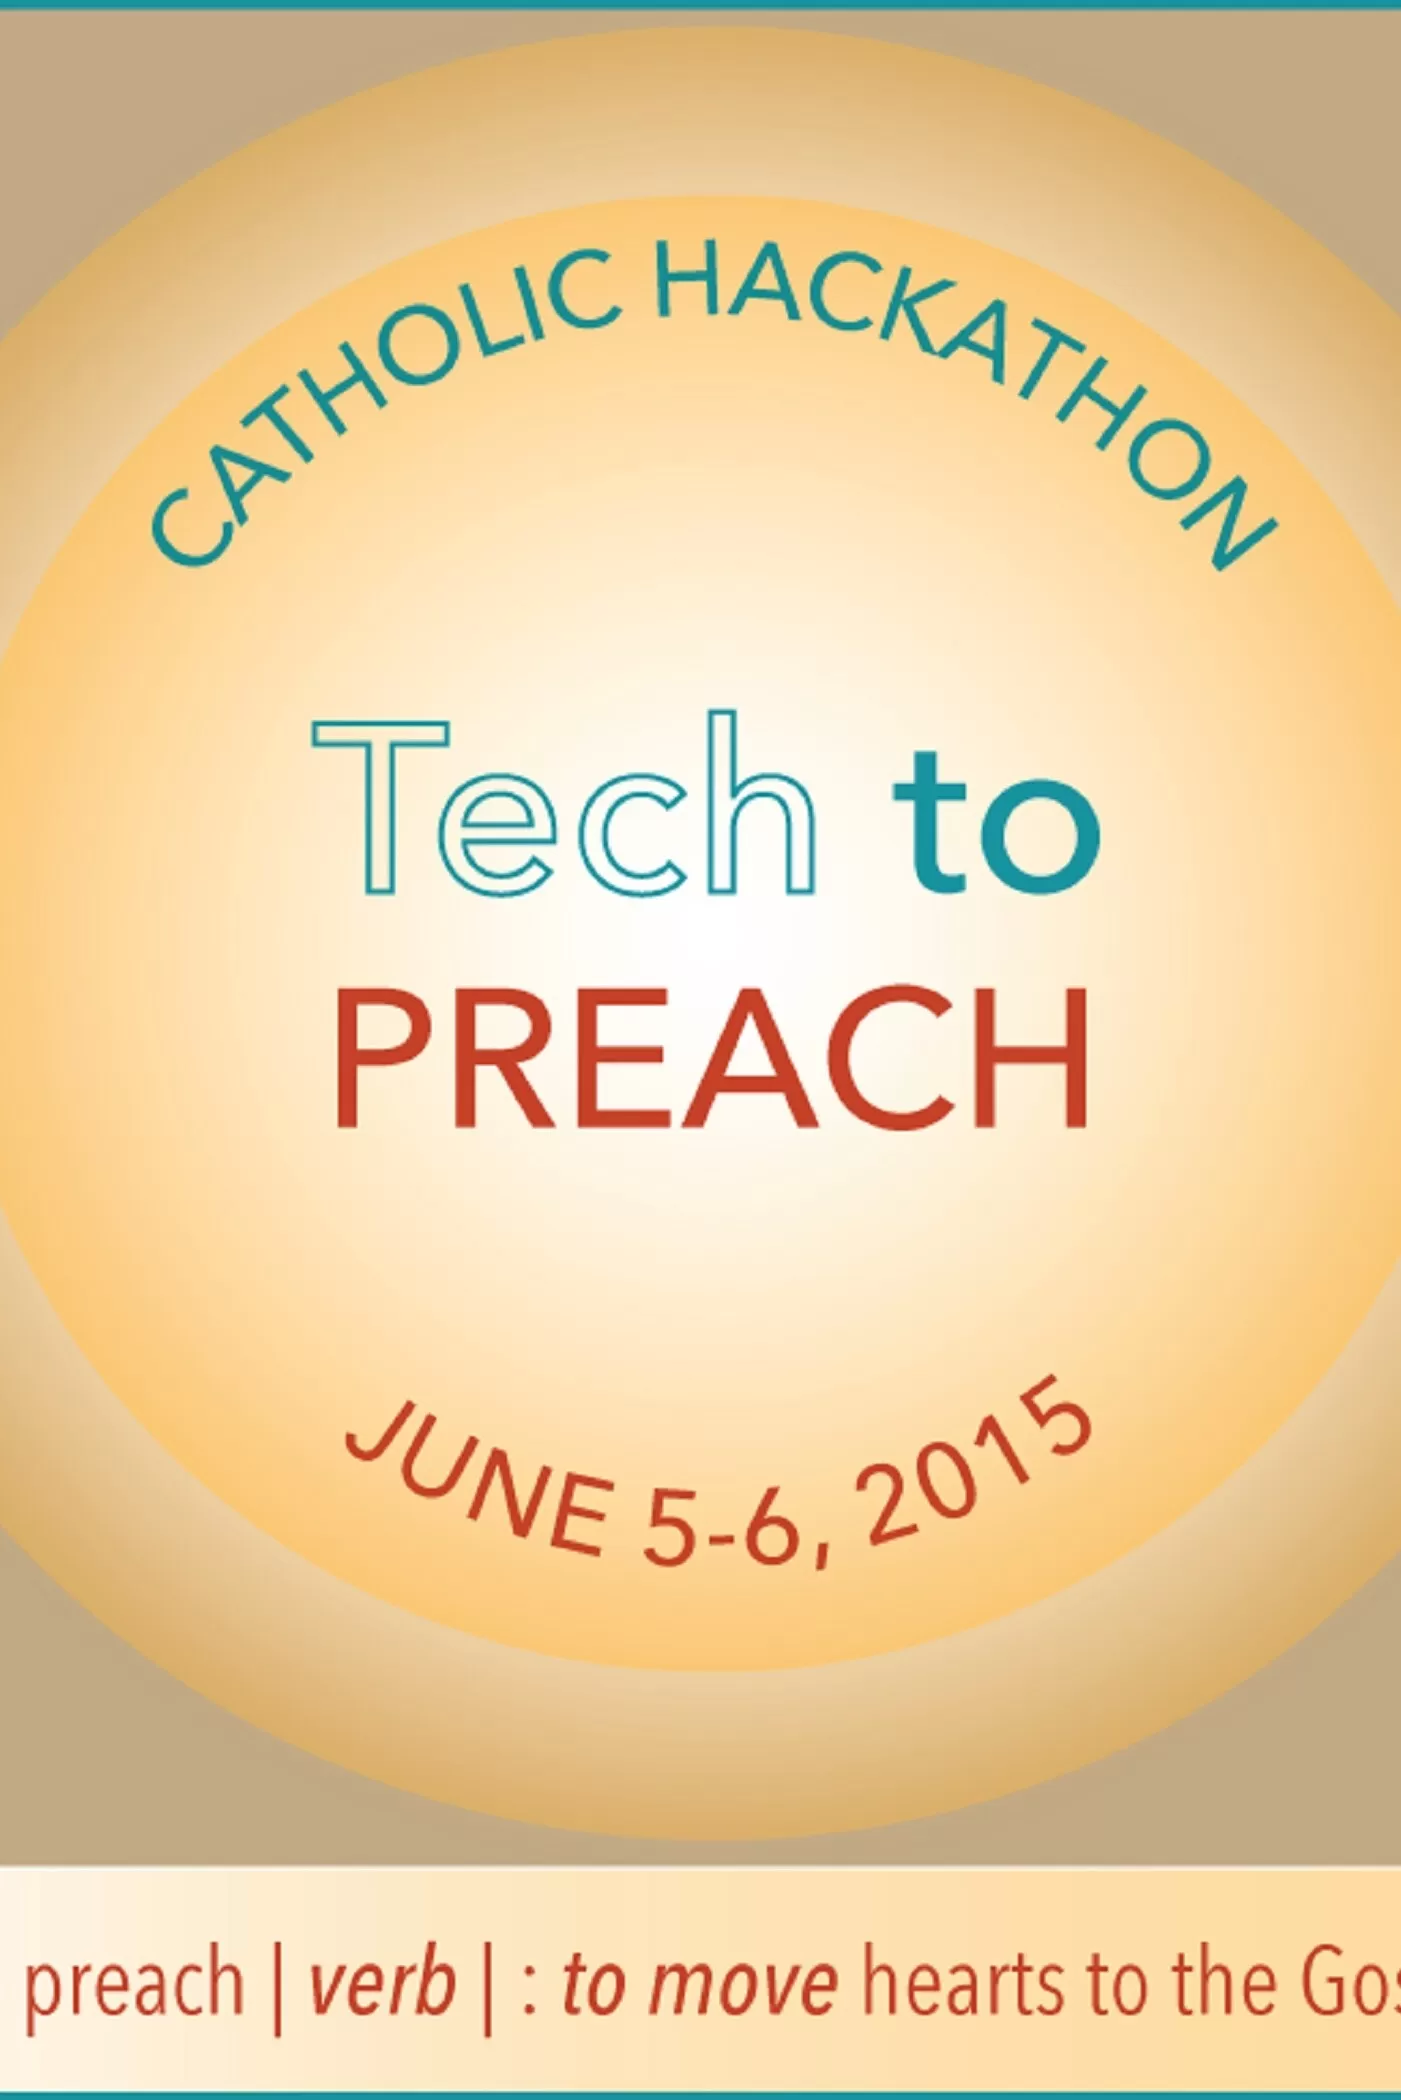 Tech to Preach - Catholic Hackathon